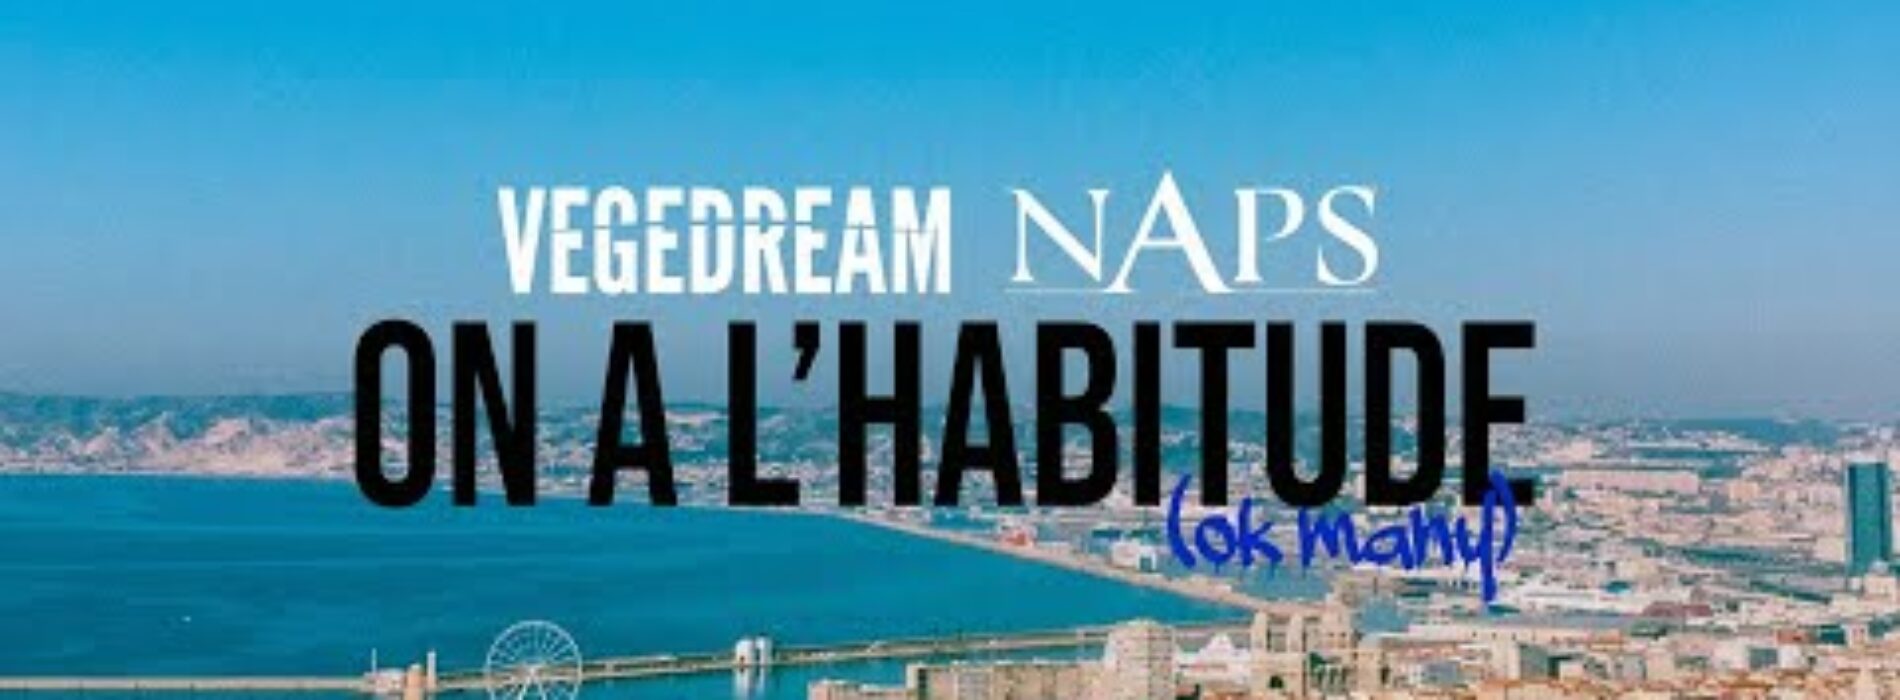 Vegedream feat Naps – « on a l’habitude » (clip officiel) – Mars 2022🔥⚡